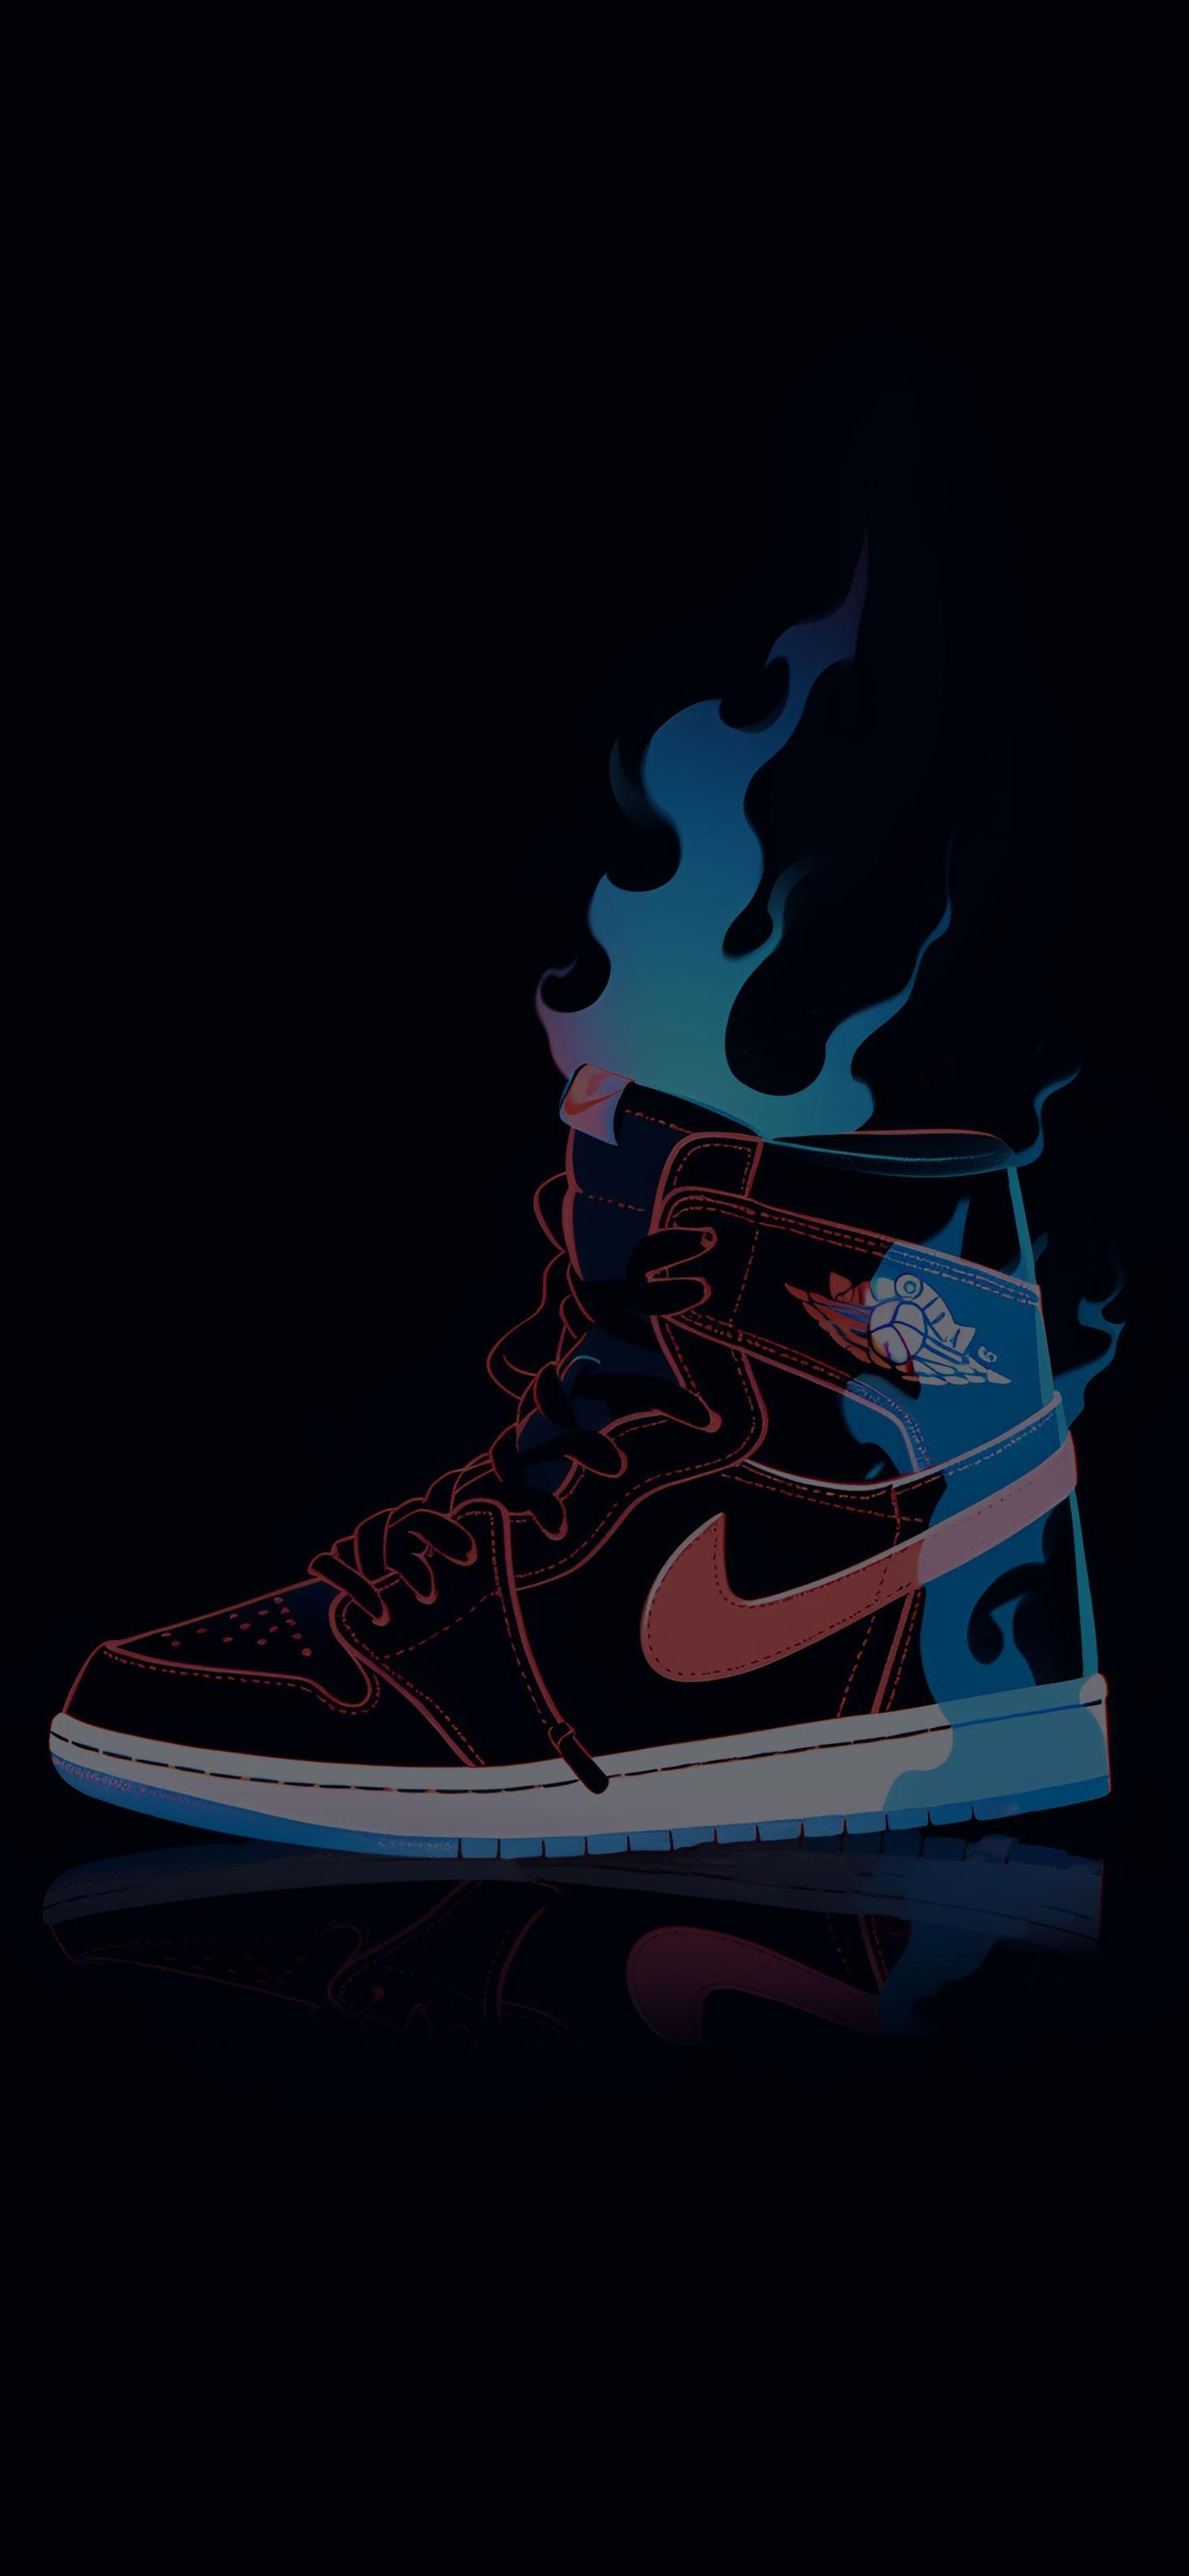 Fiery Nike Air Jordan Cool Wallpaper Sneakerhead